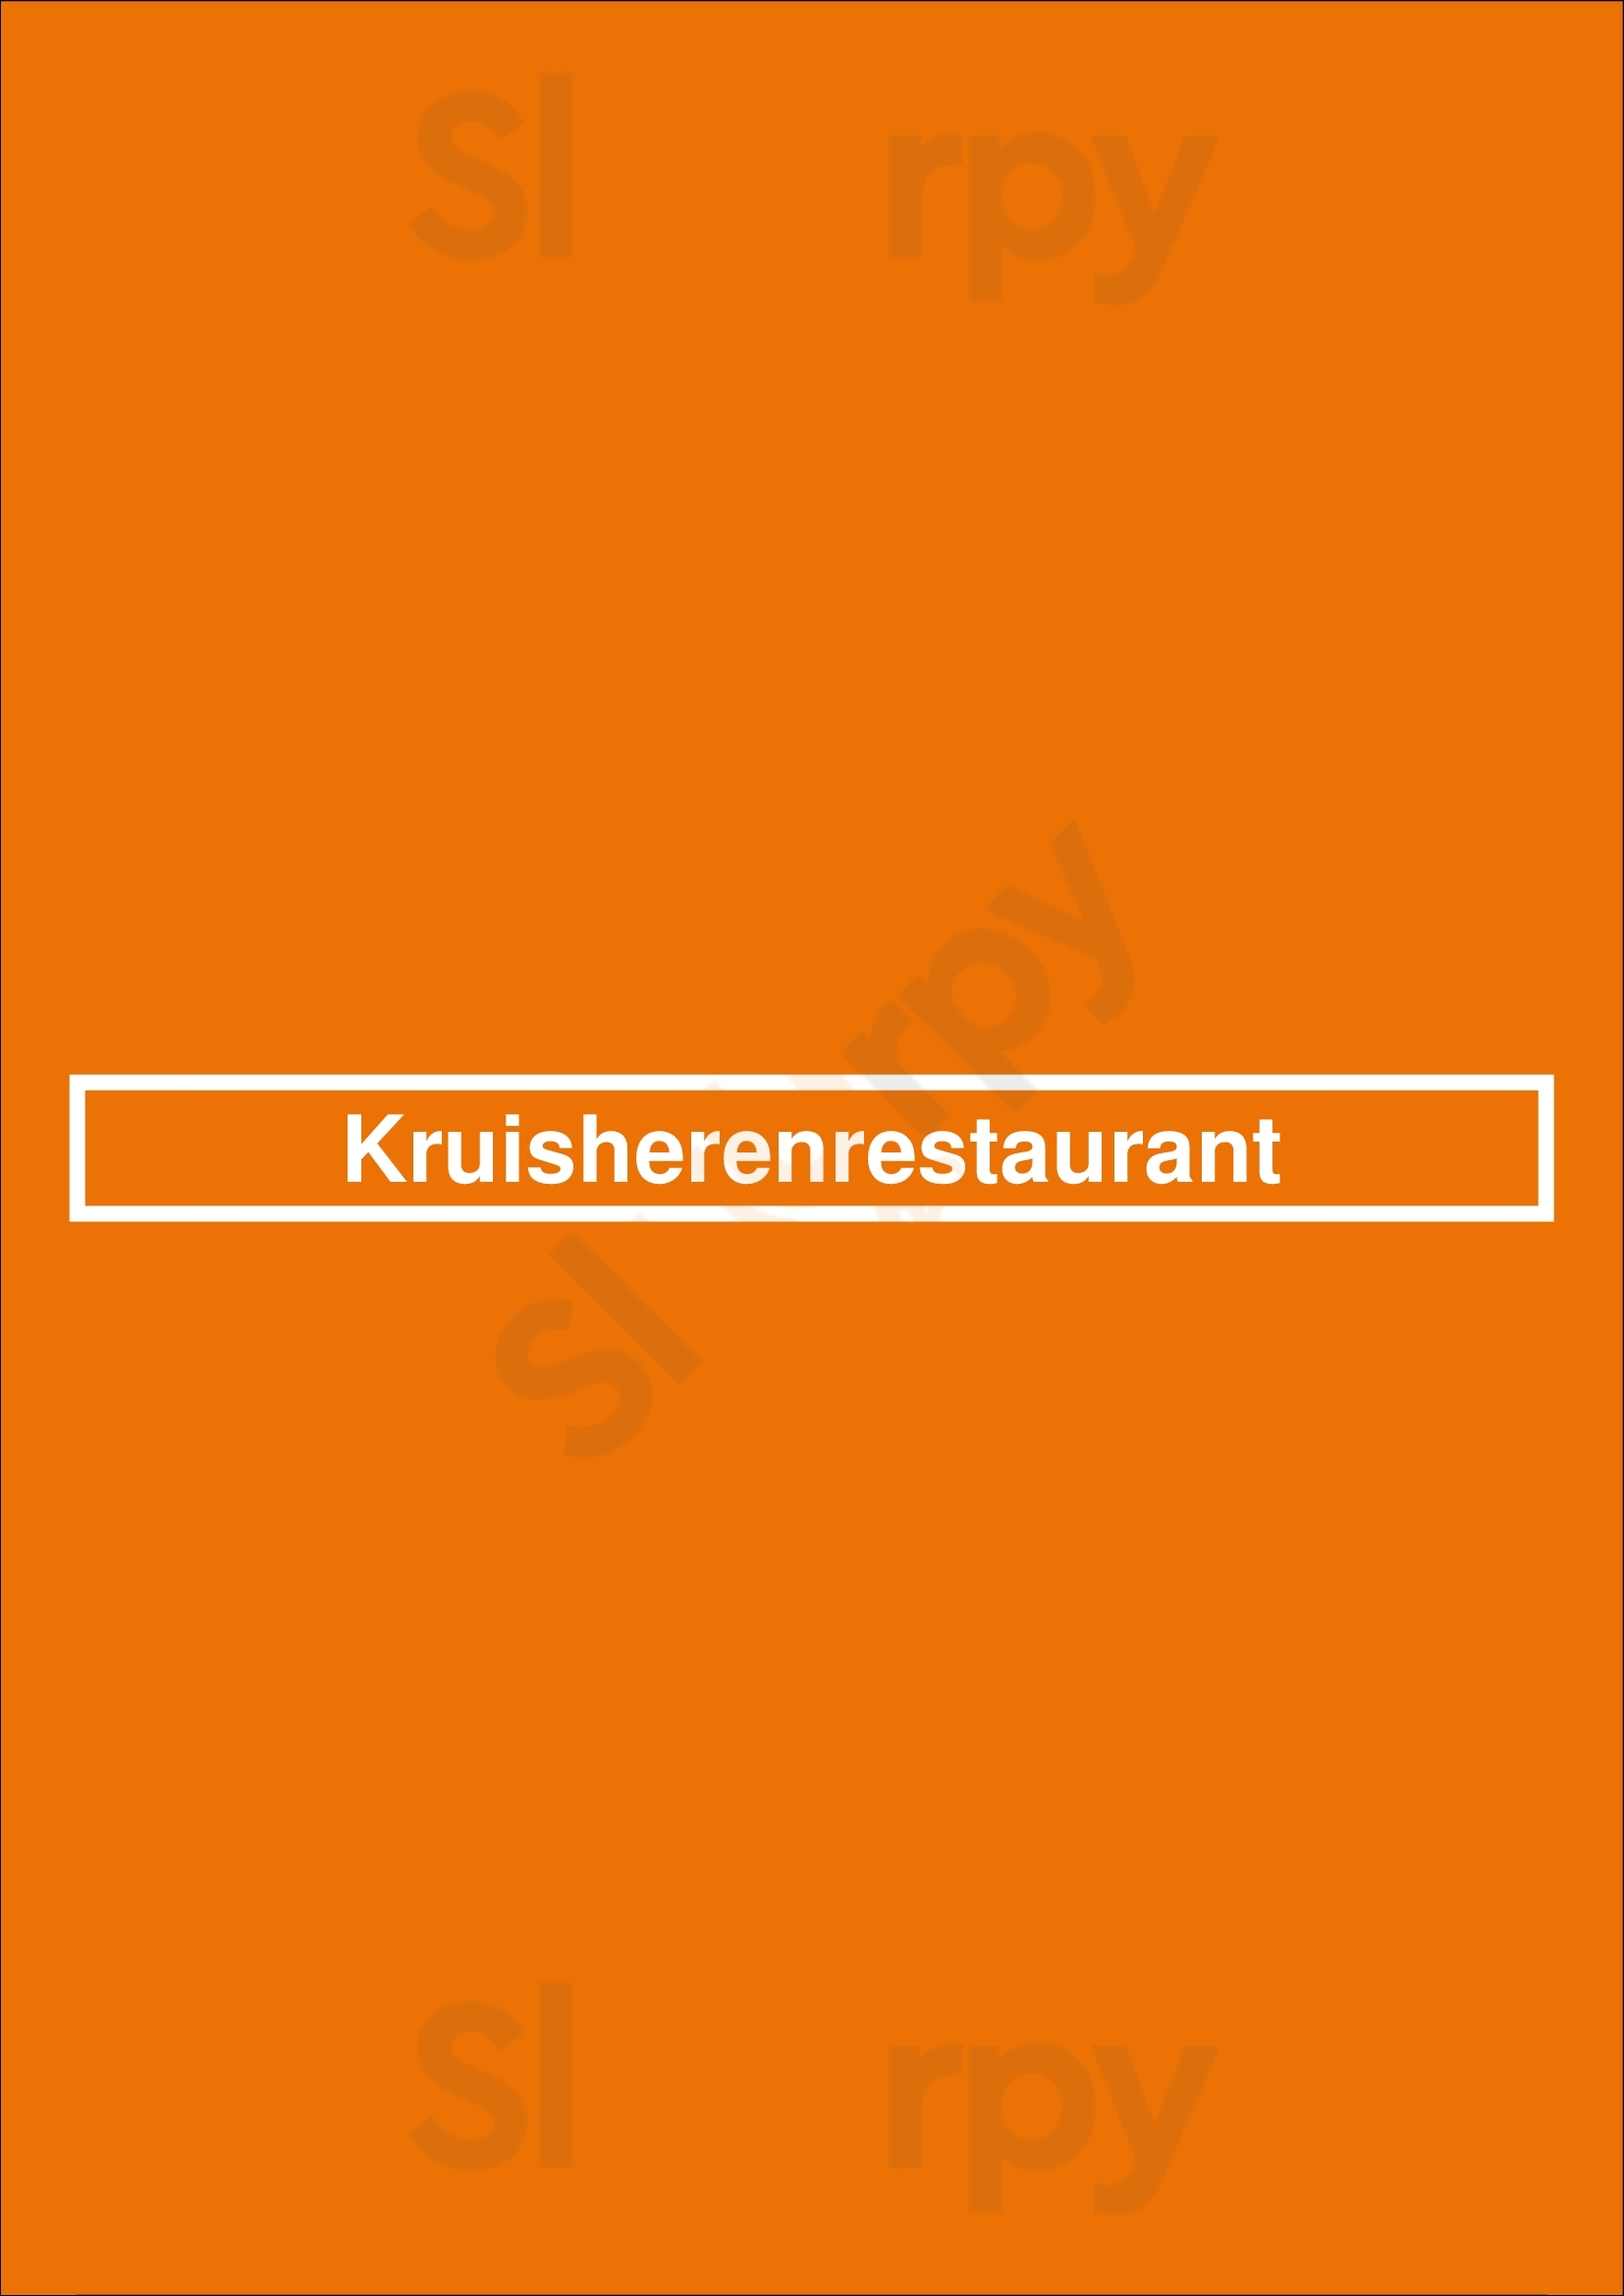 Kruisherenrestaurant Maastricht Menu - 1